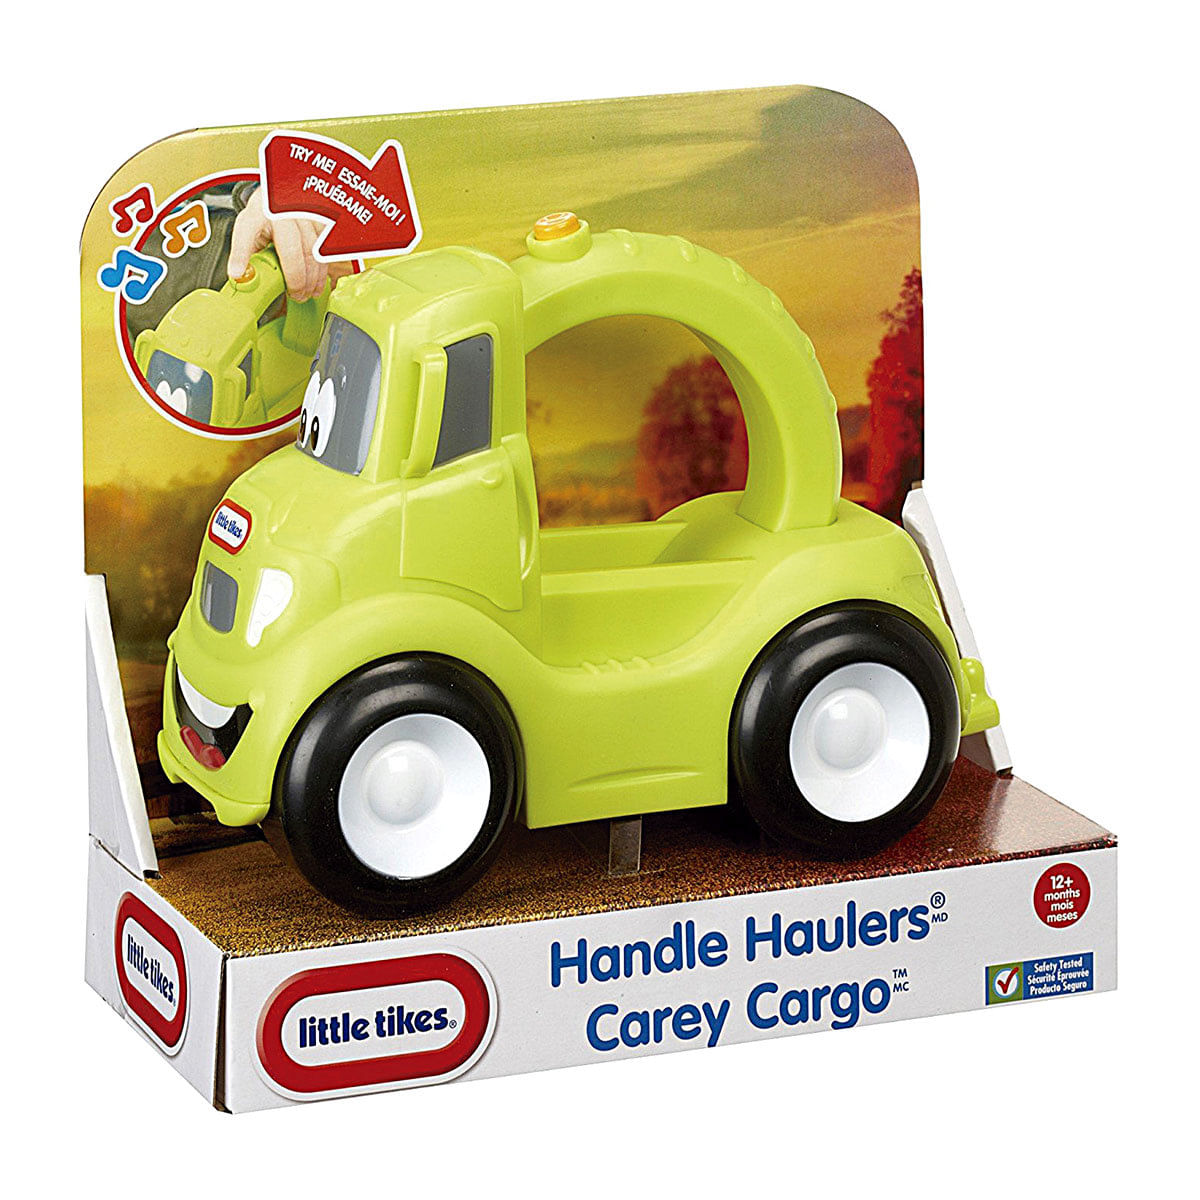 5472040_Carrinho-Handle-Haulers-Carey-Cargo-Candide-9903_2_Zoom